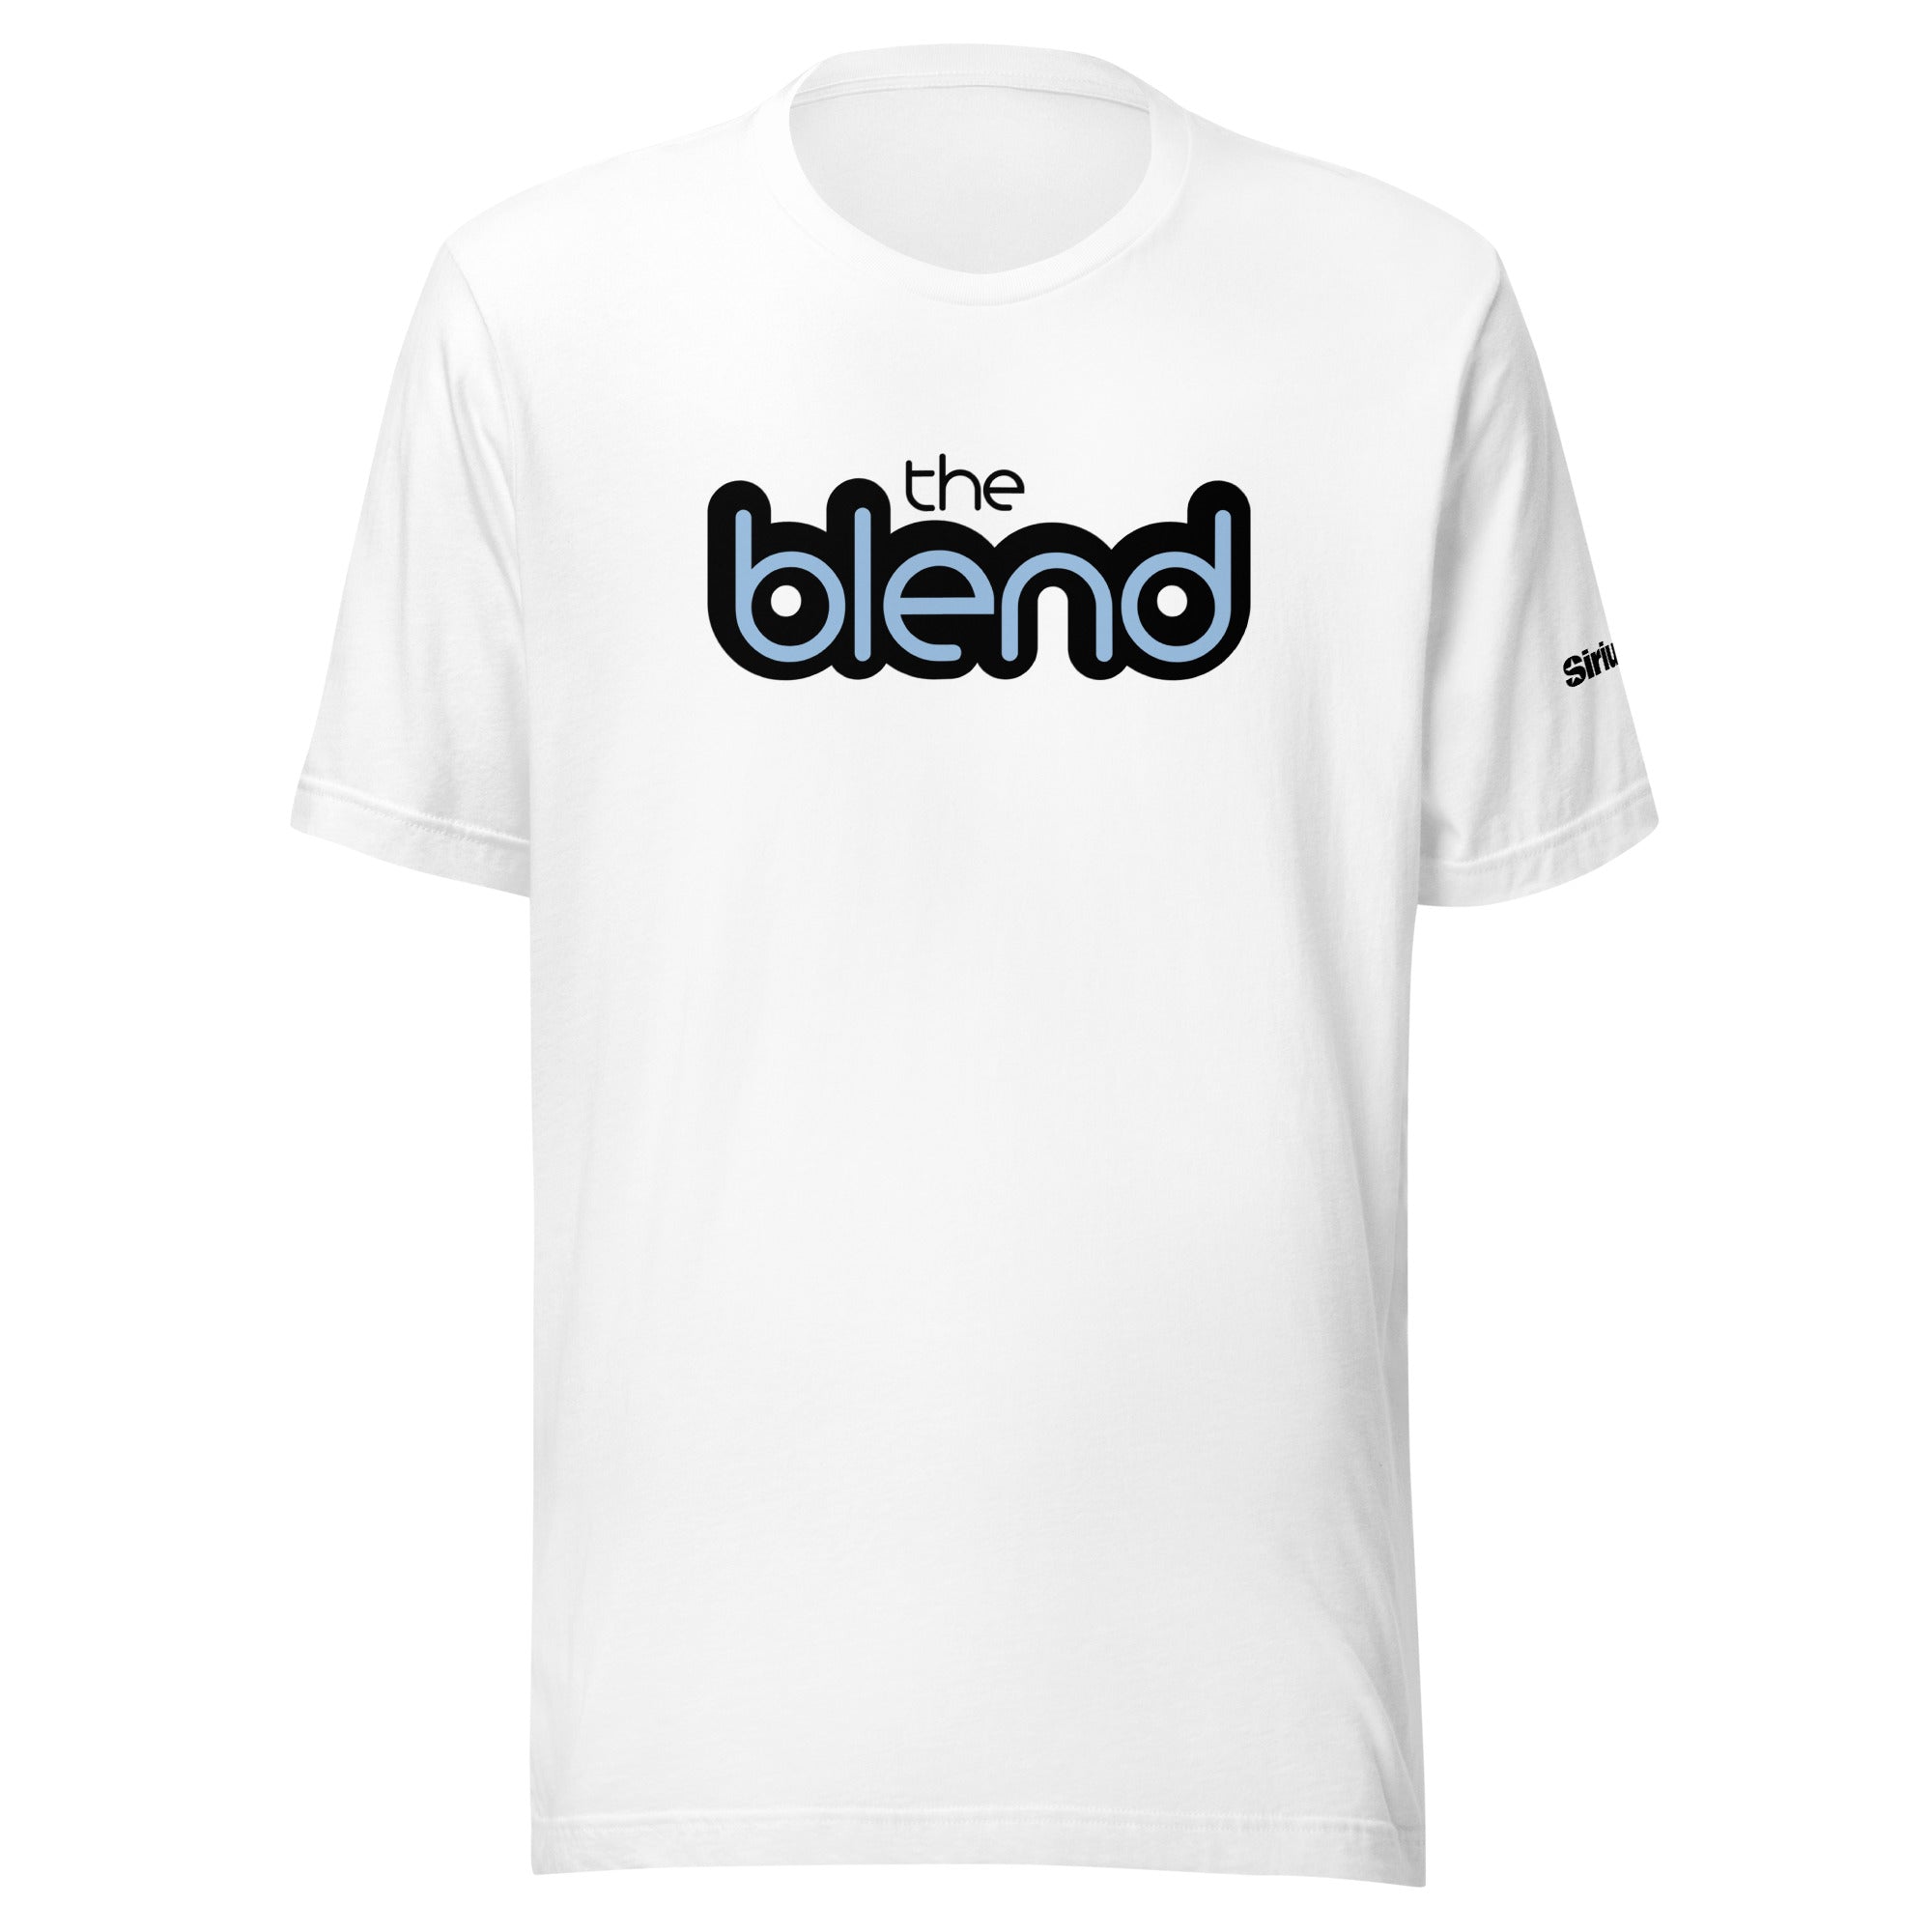 The Blend: T-shirt (White)